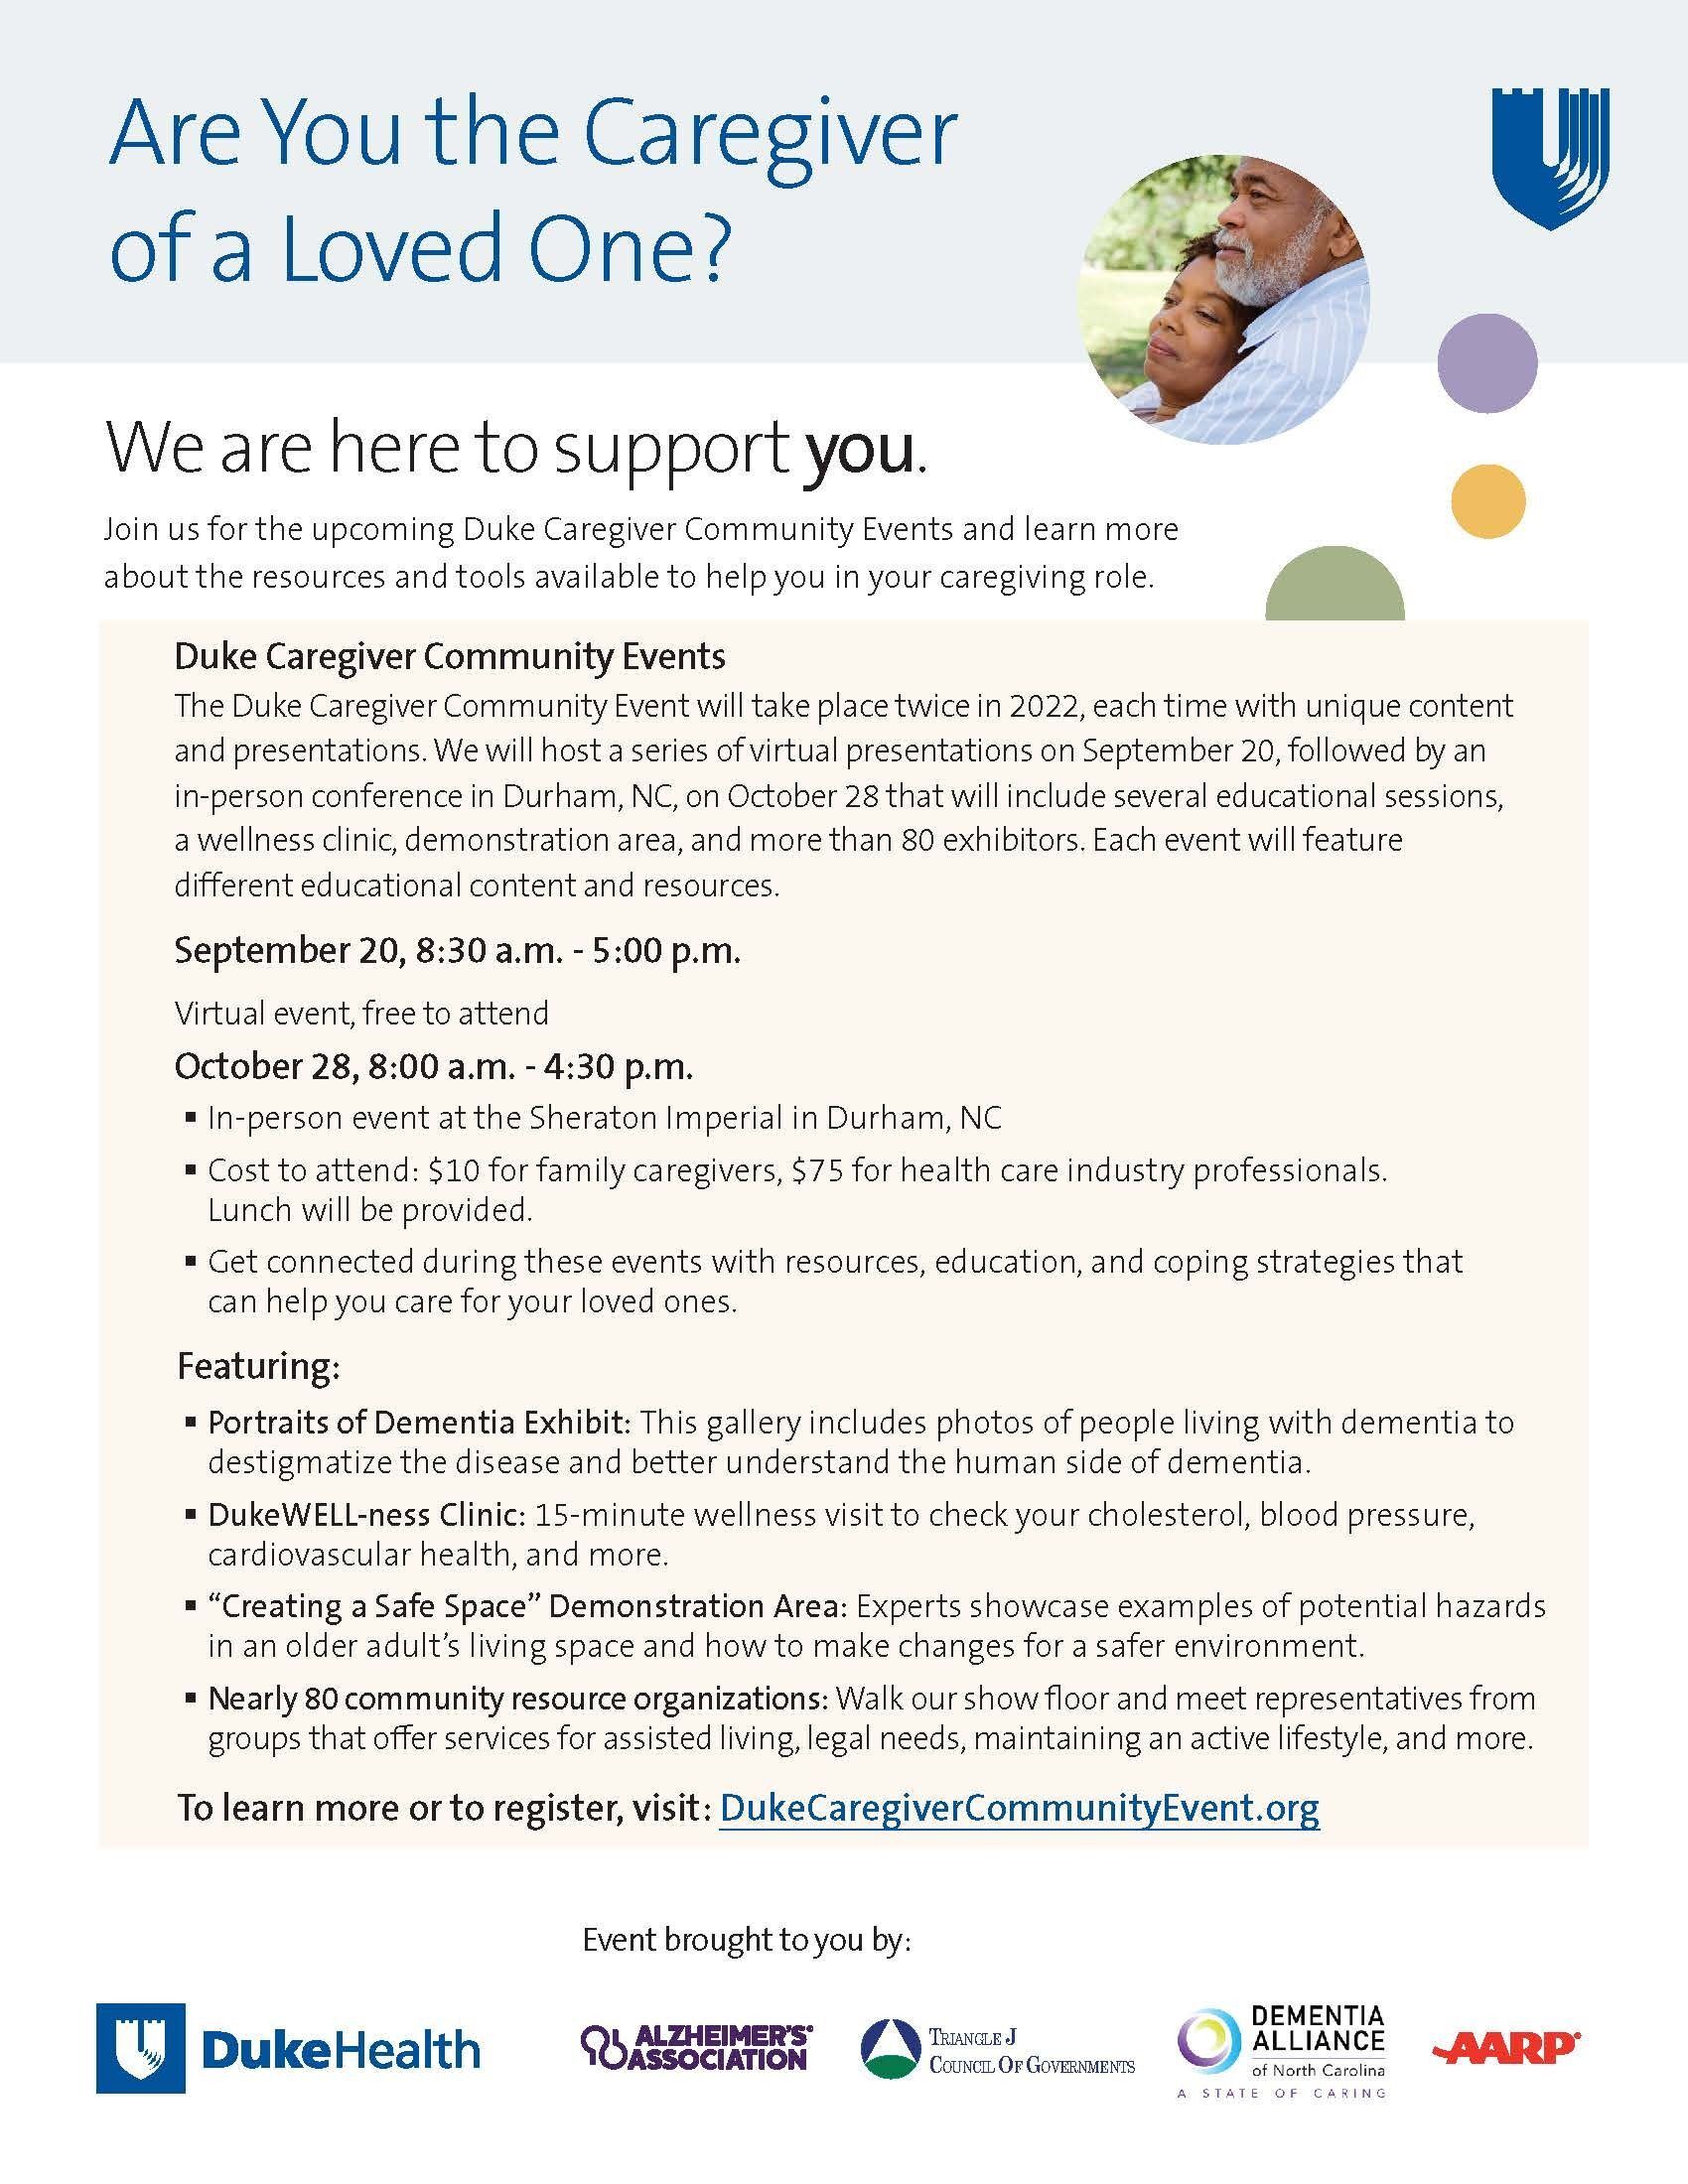 Duke Caregiver Community Events - Sept & Oct 2022